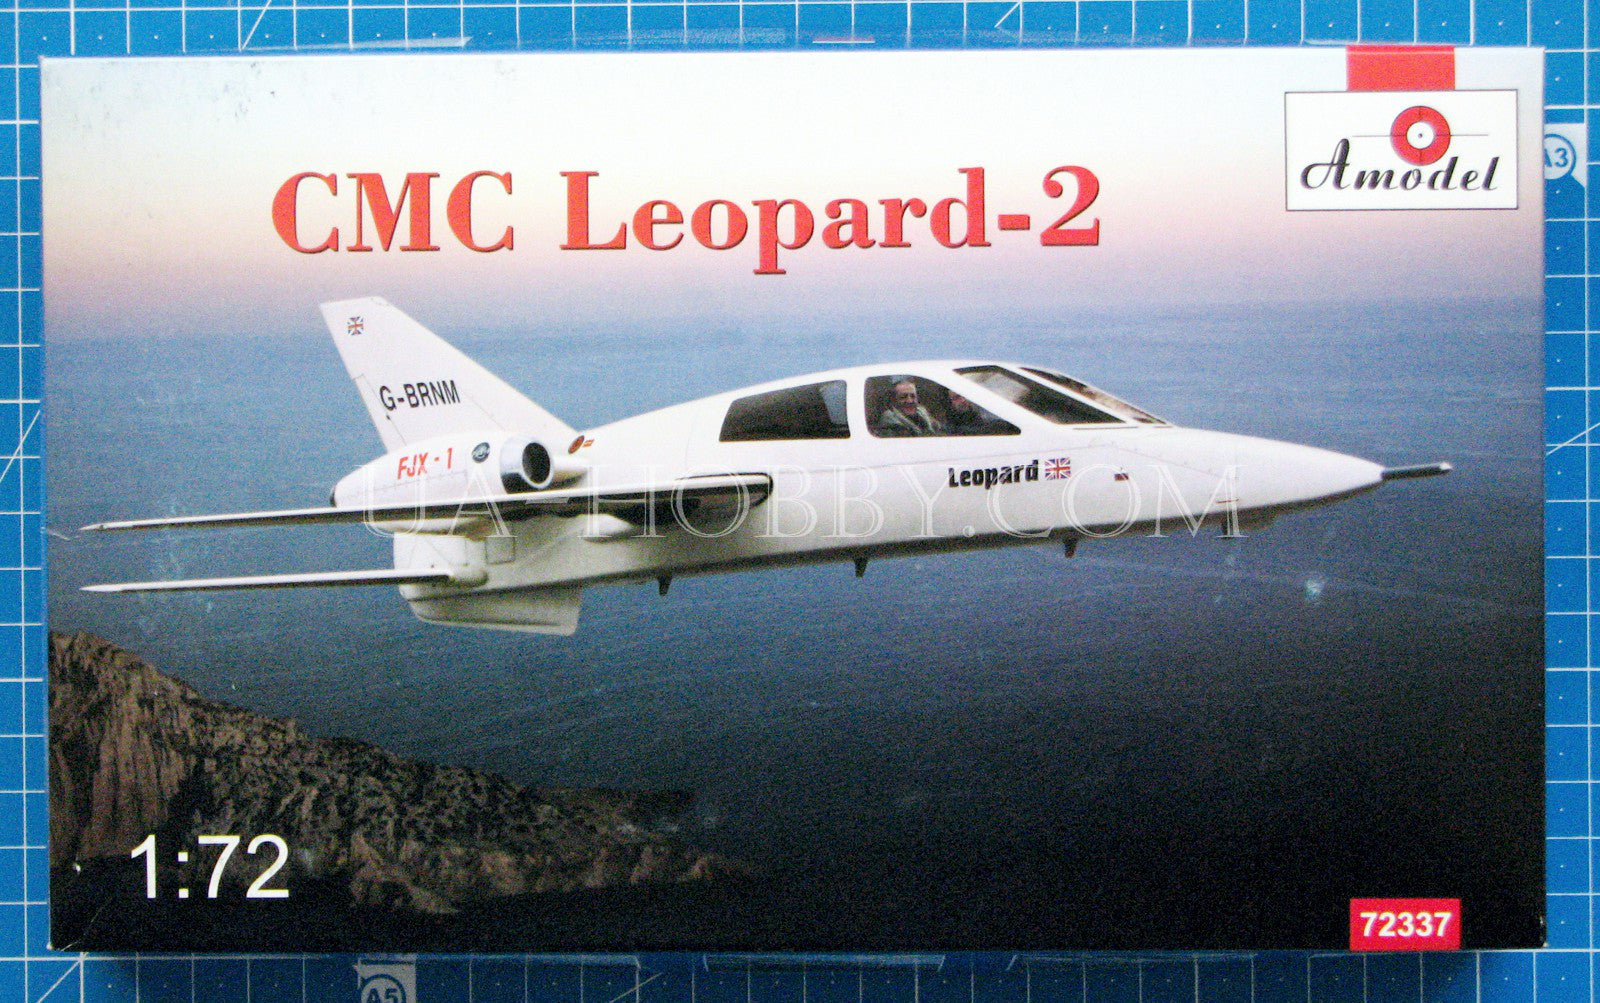 1/72 CMC Leopard-2. Amodel 72337